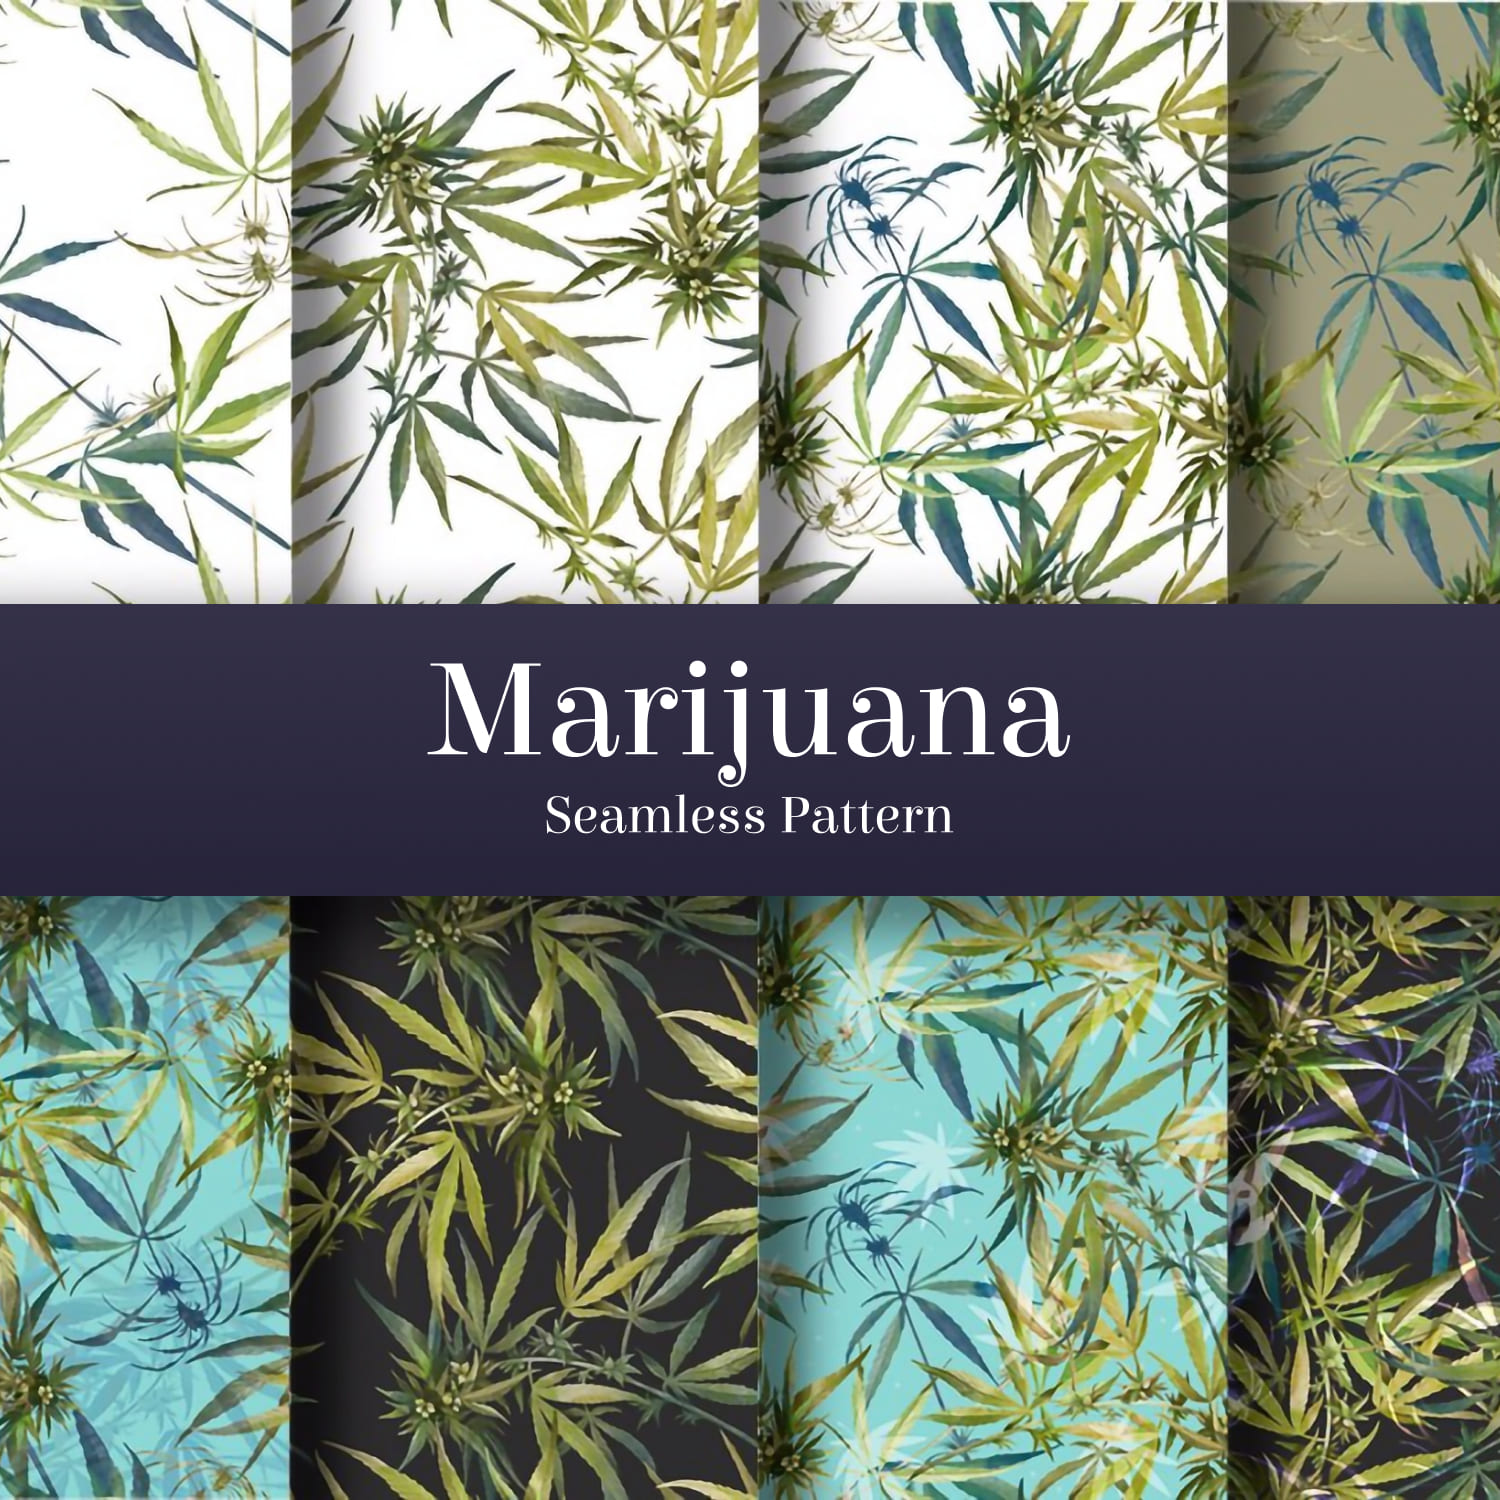 Marijuana seamless pattern - main image preview.